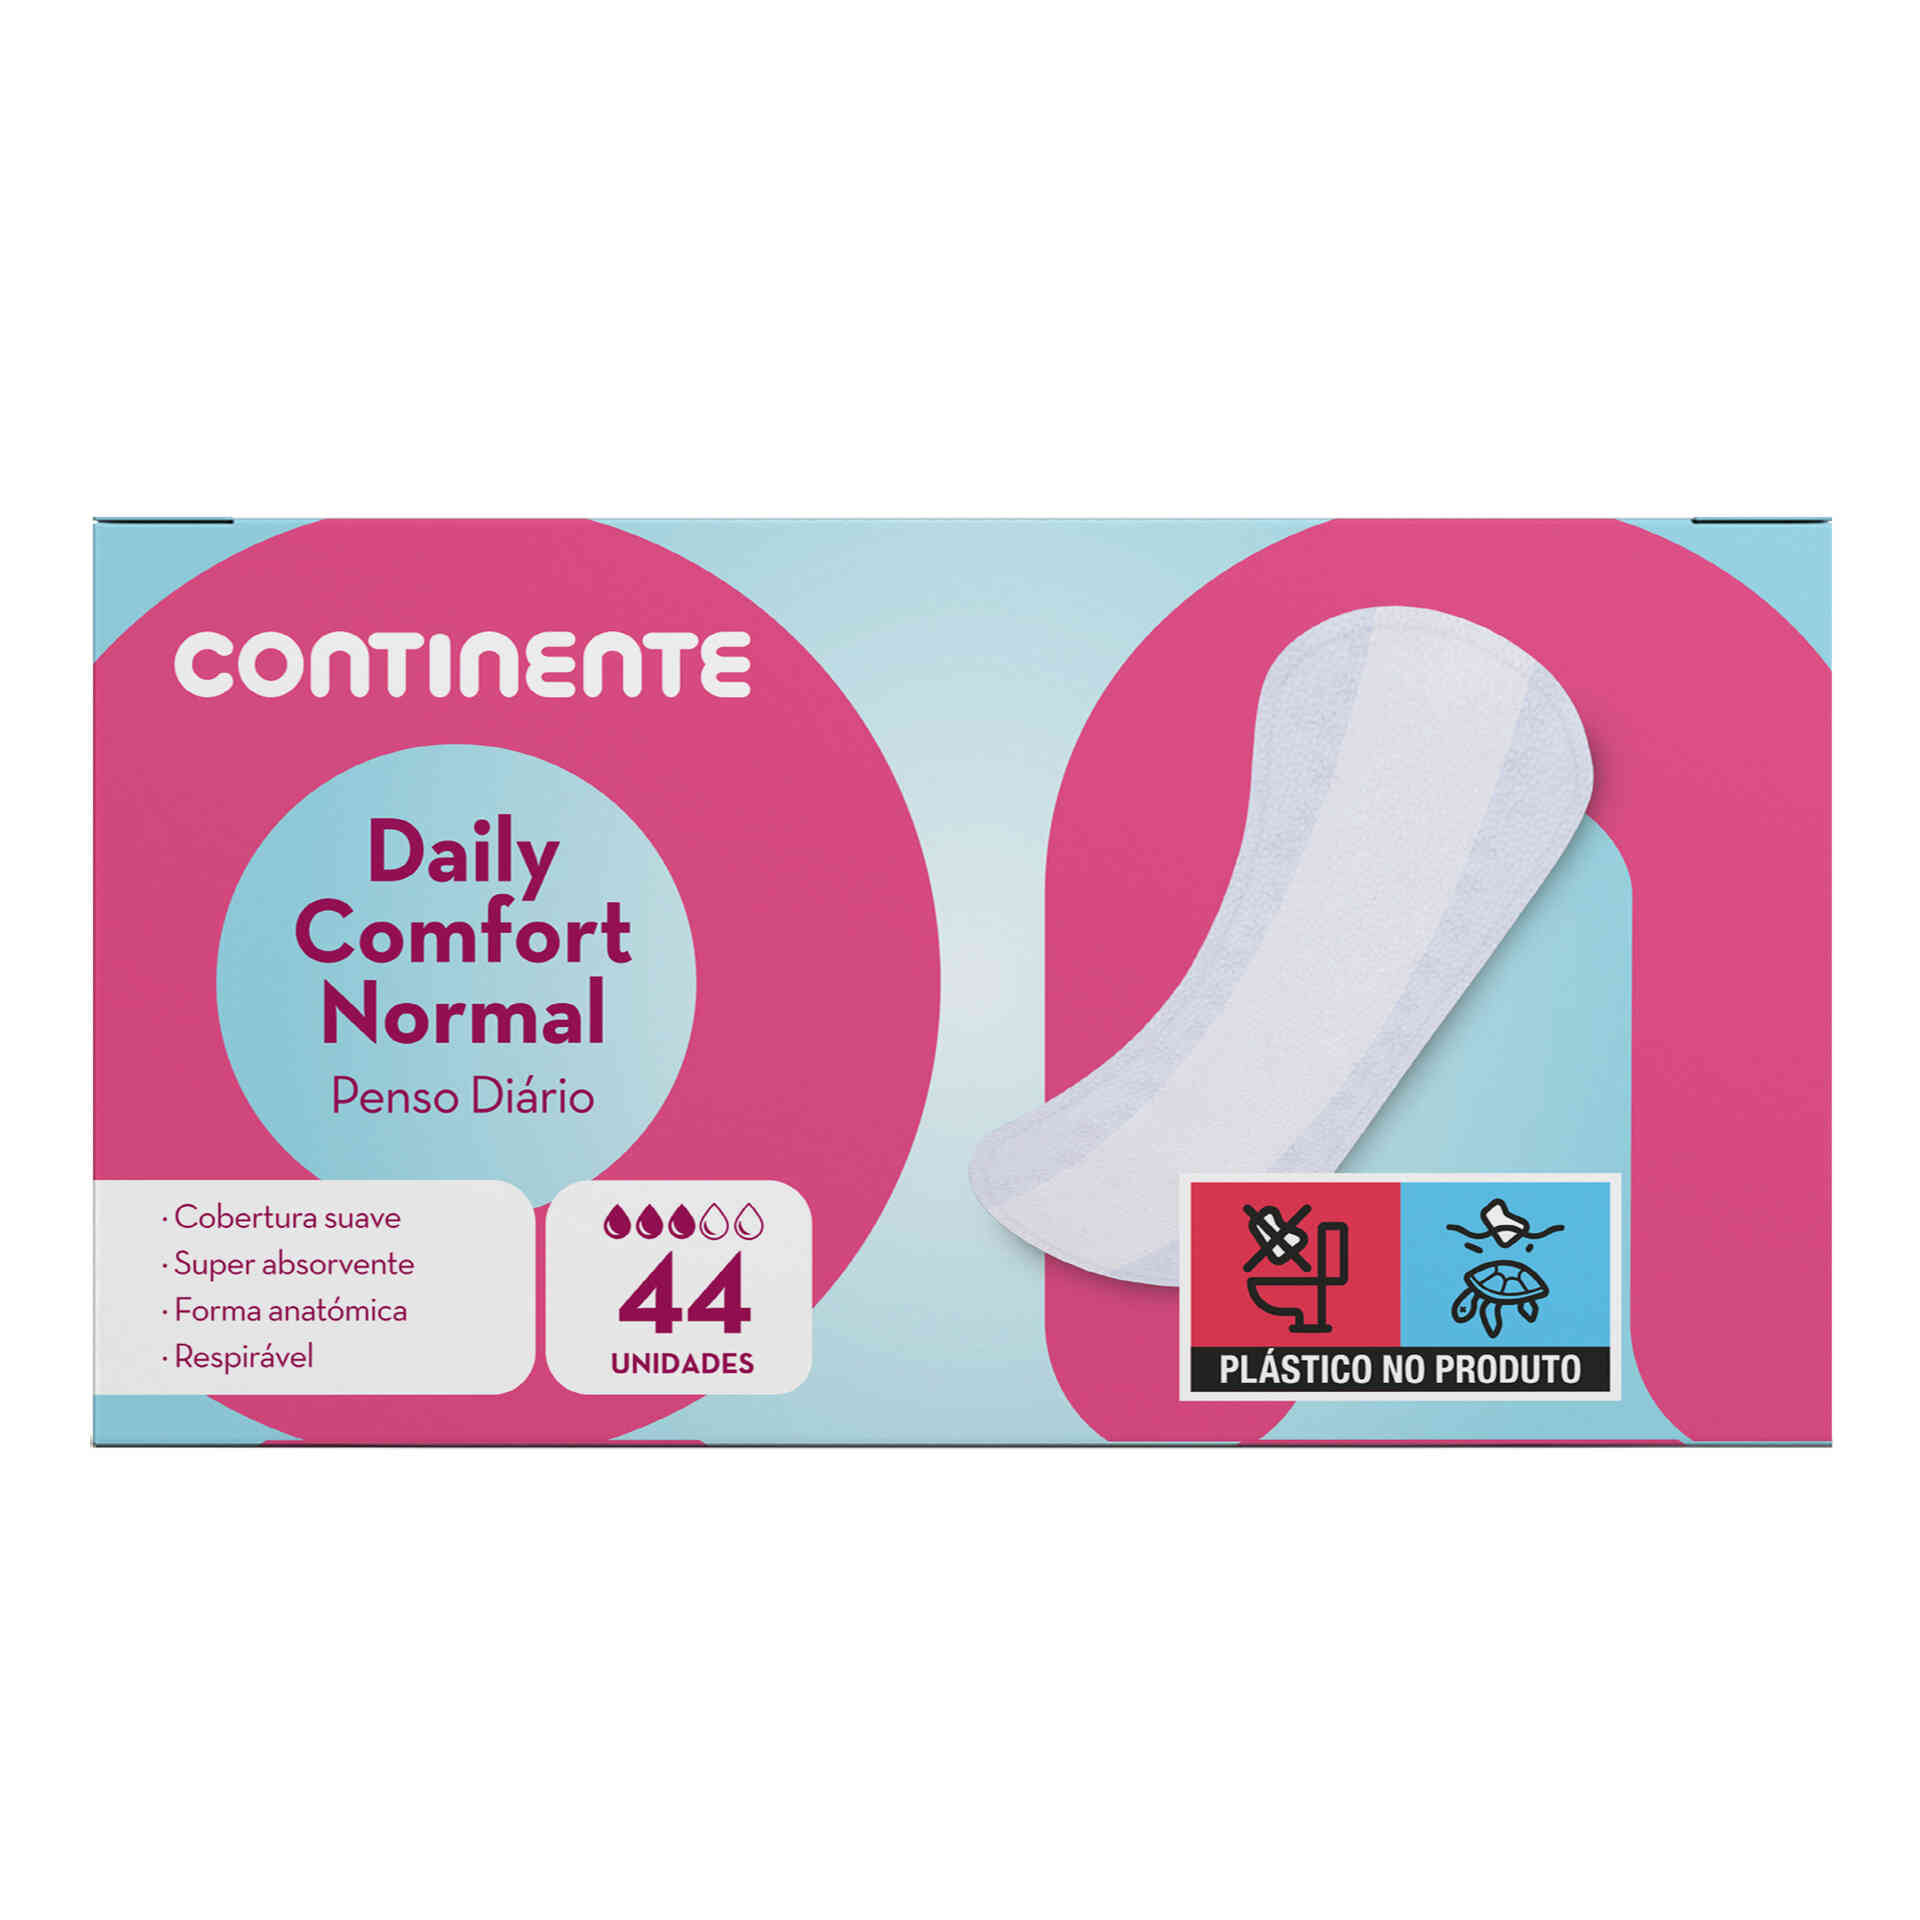 Pensos Diários Daily Comfort Ultra Fino - emb. 44 un - Continente